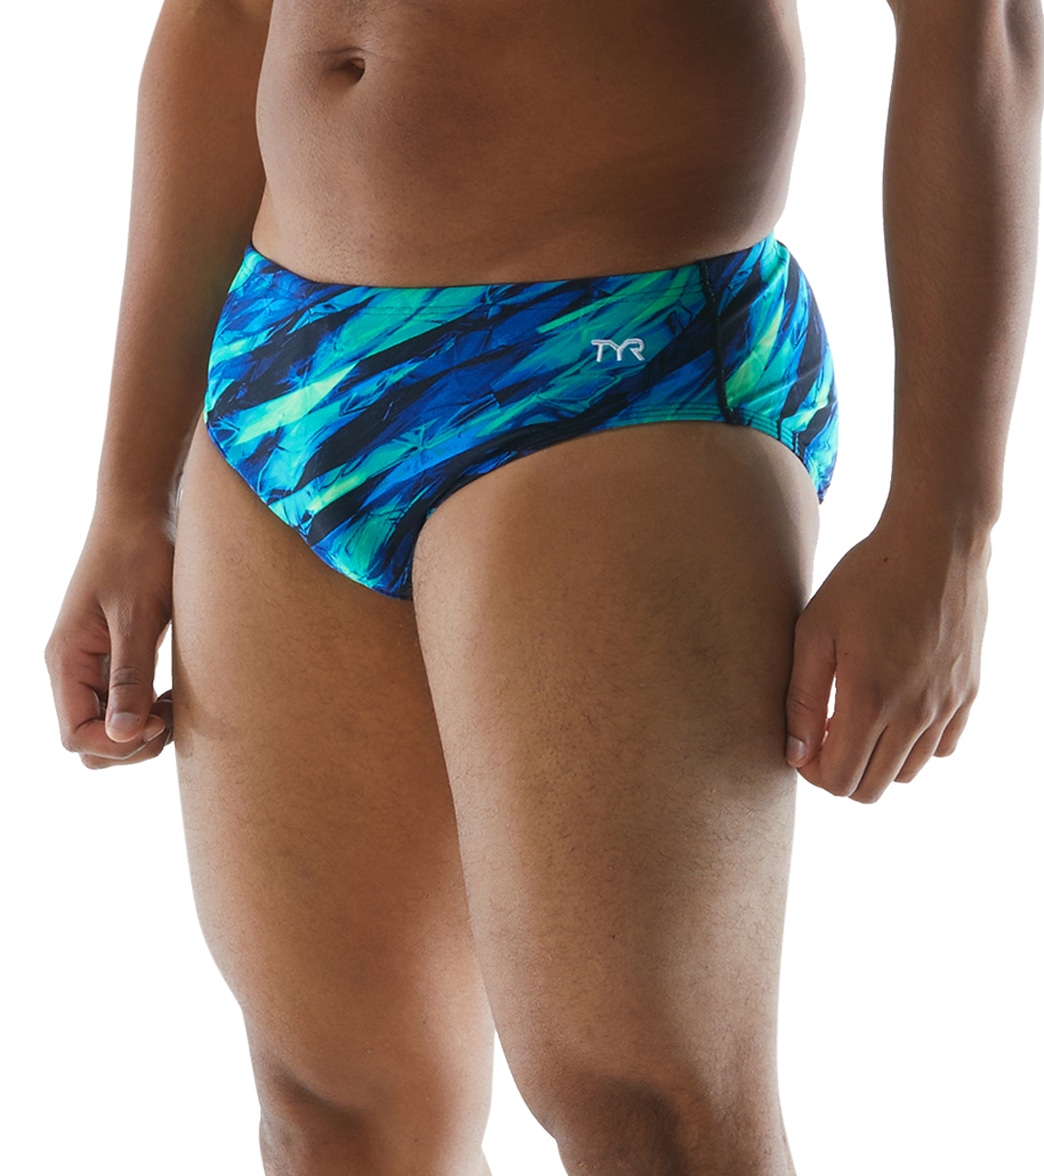 TYR Men's Vitric Racer Brief Swimsuit - Blue/Green 26 - Swimoutlet.com